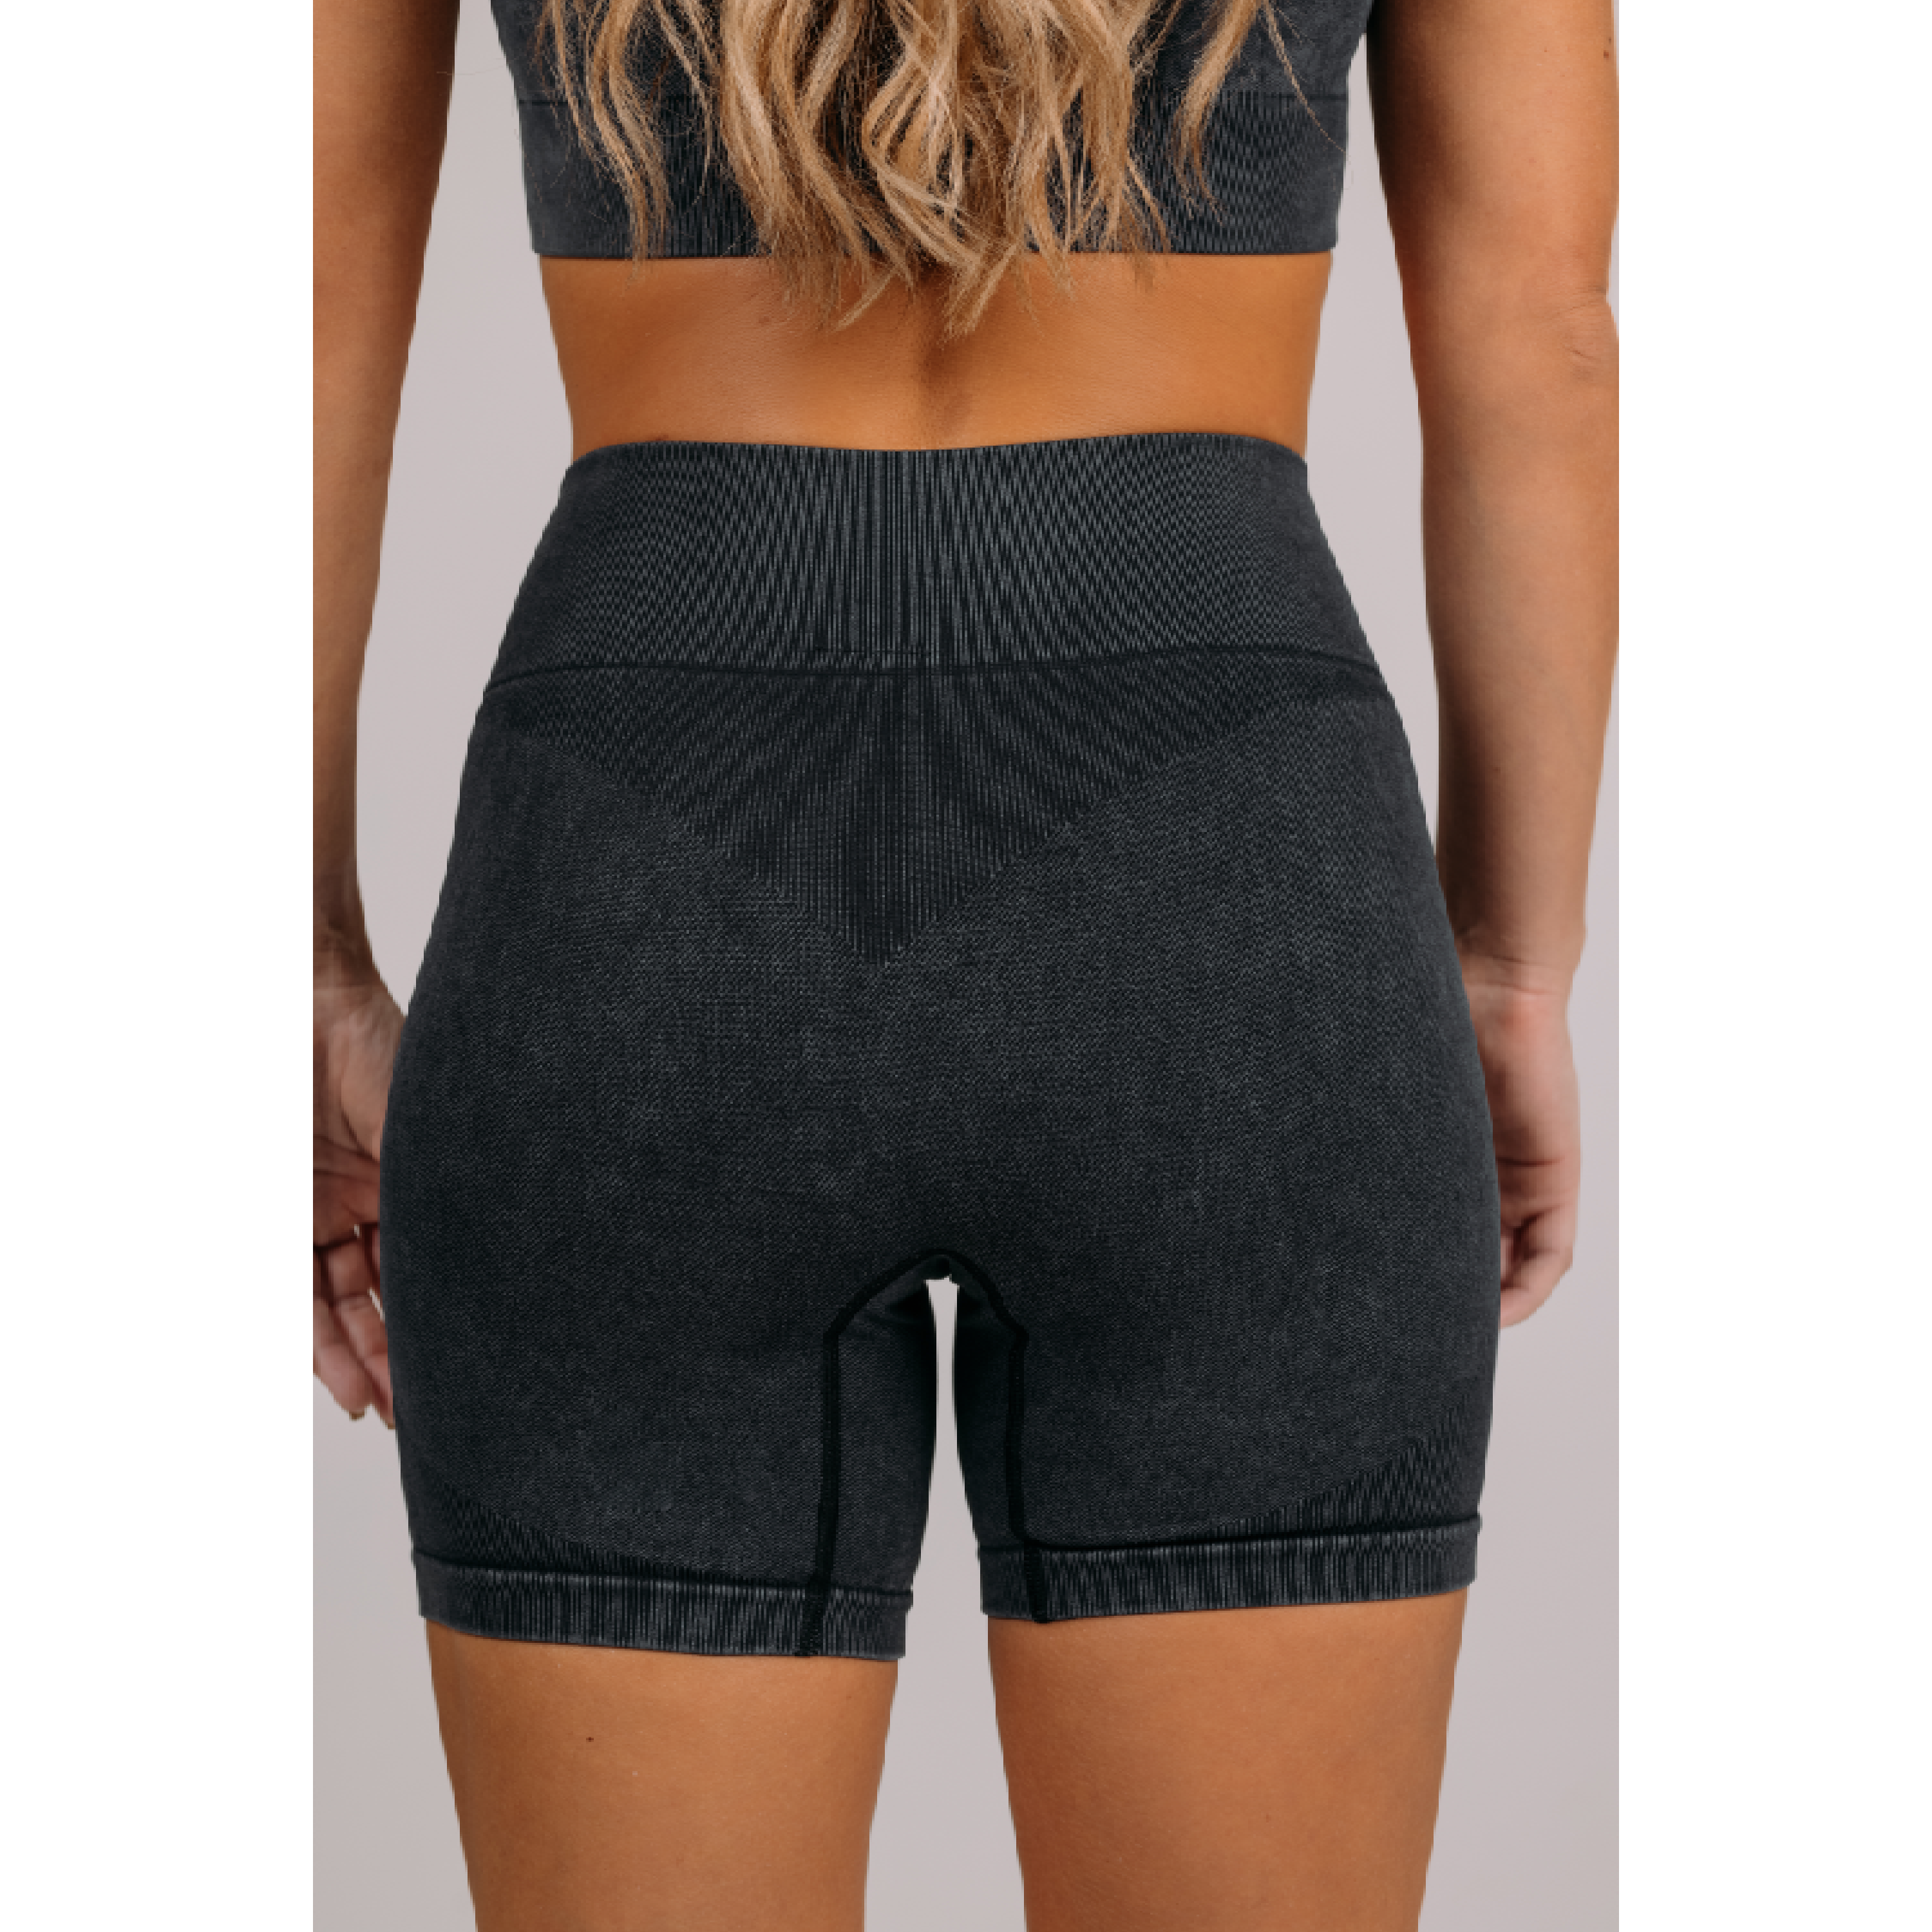 Palmfit Apex Seamless Shorts, Onyx Black